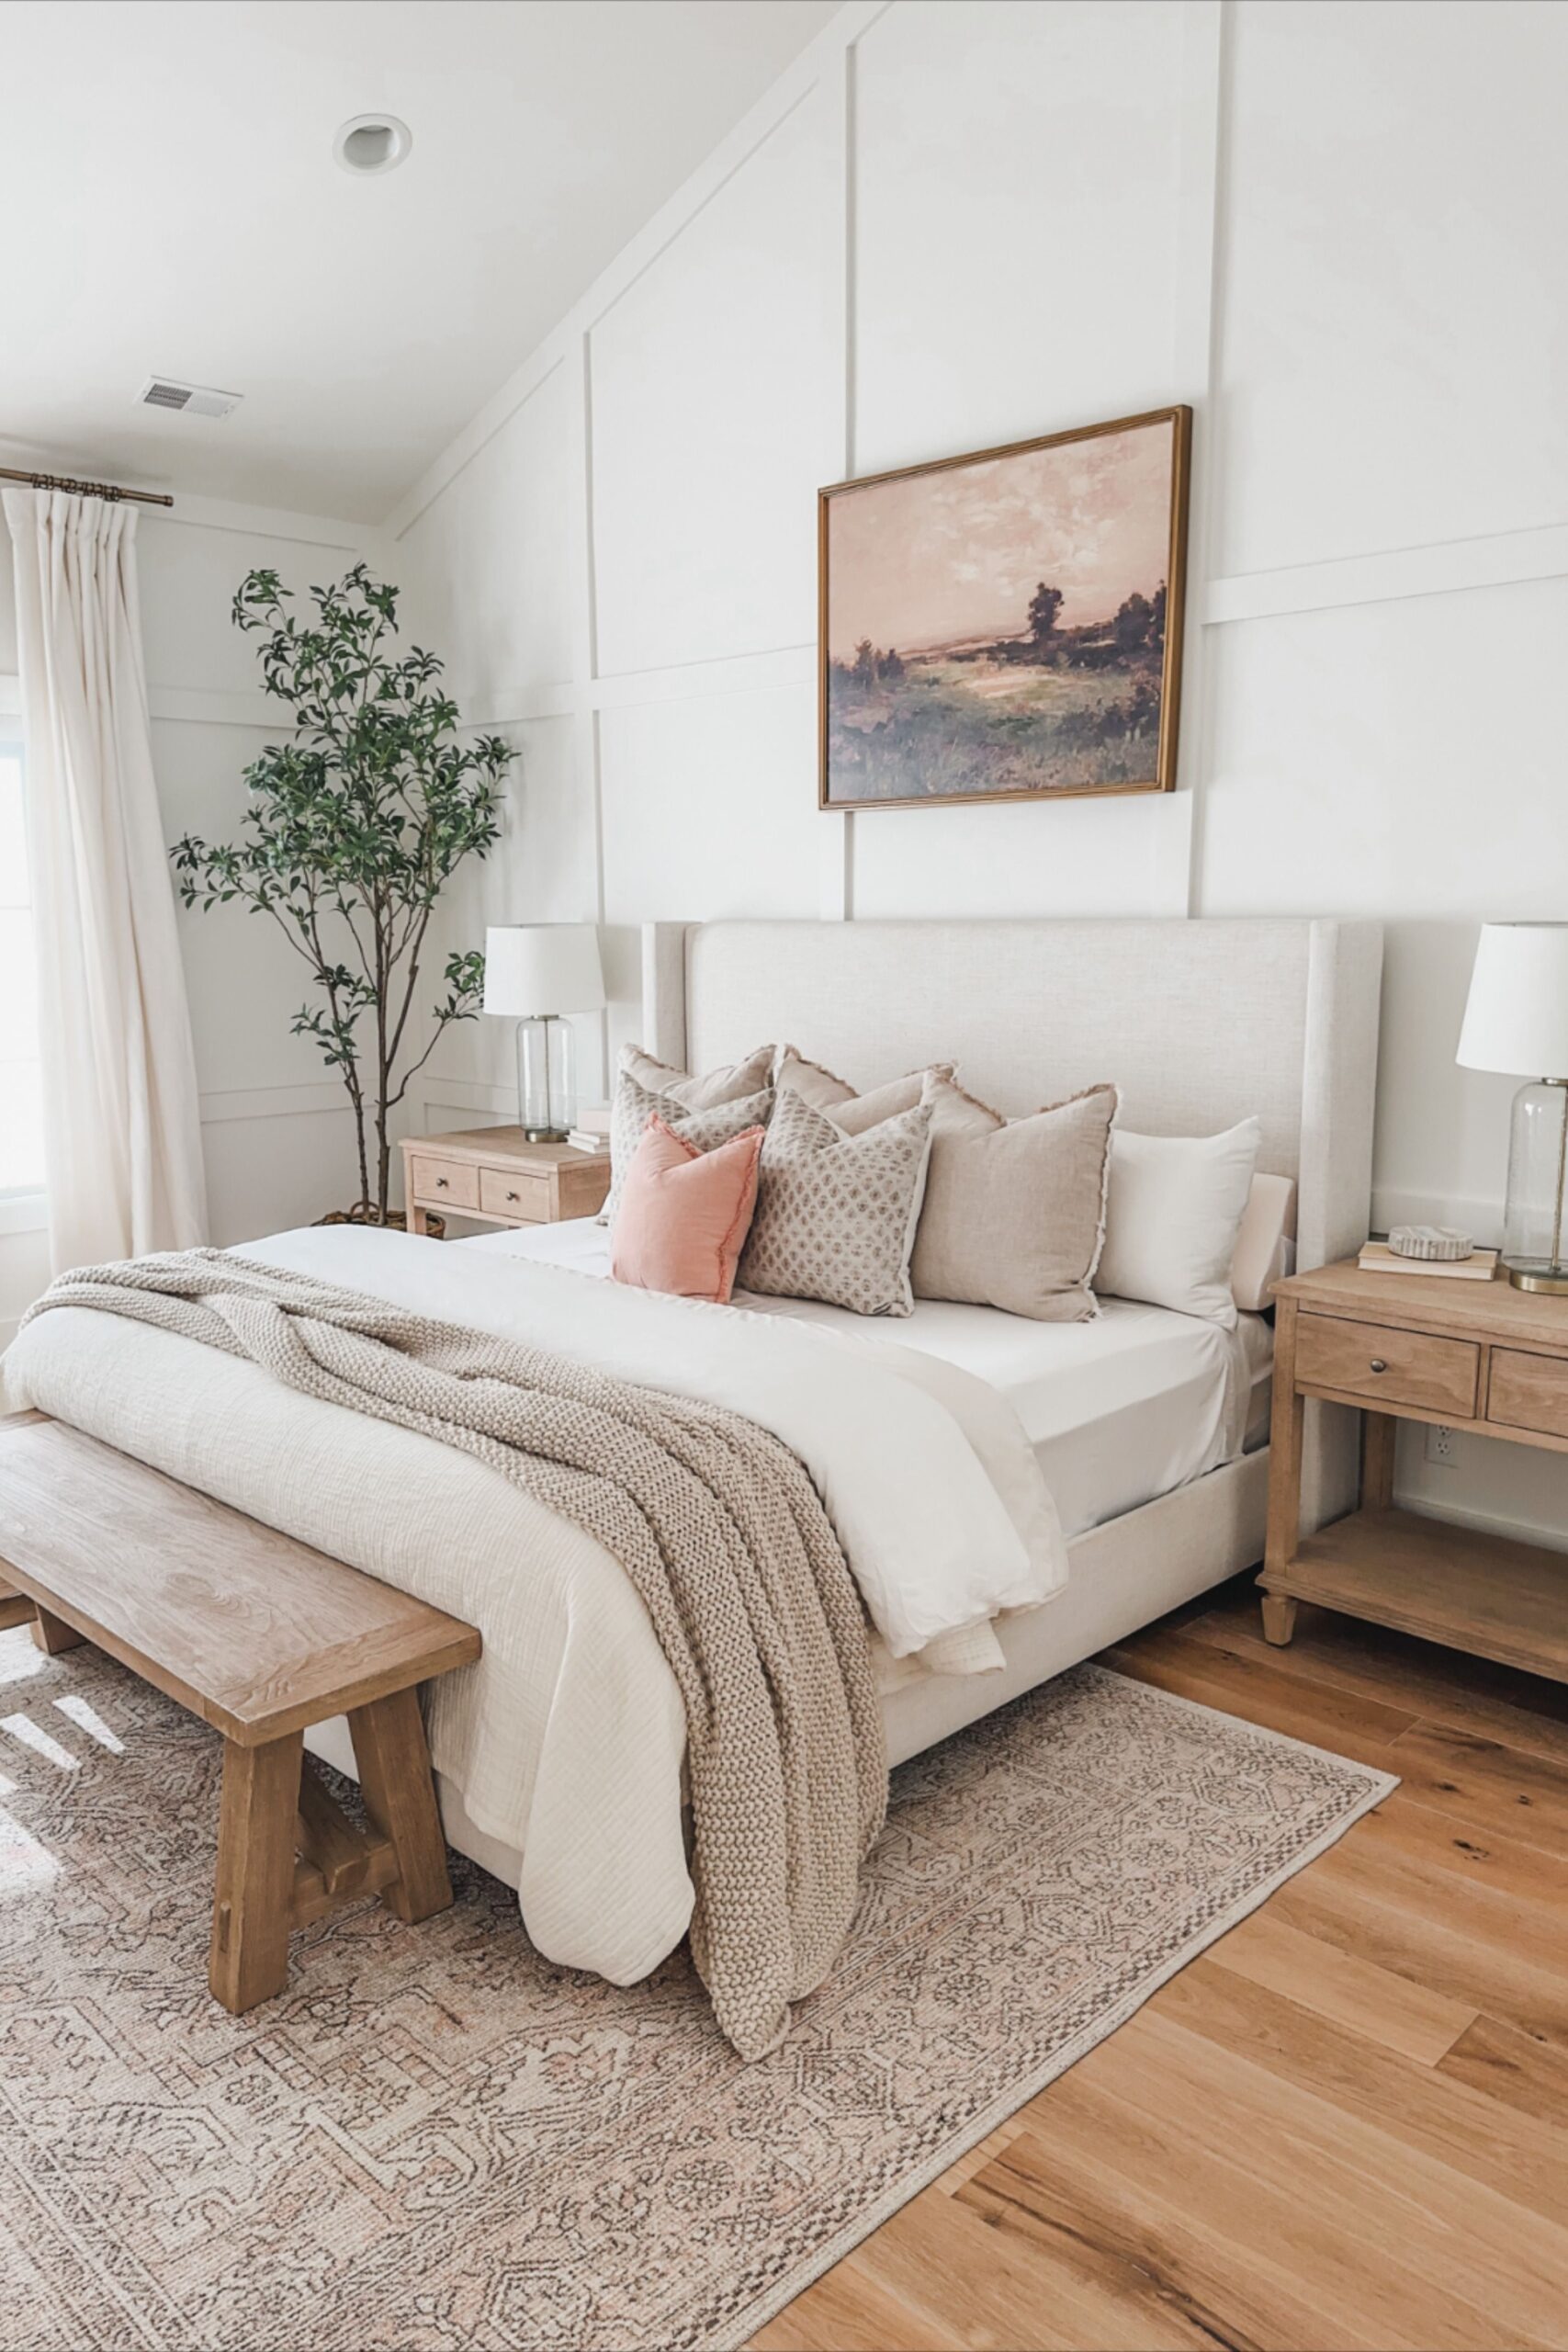 Oak Bedroom Furniture makes the Most  Sensible Choice